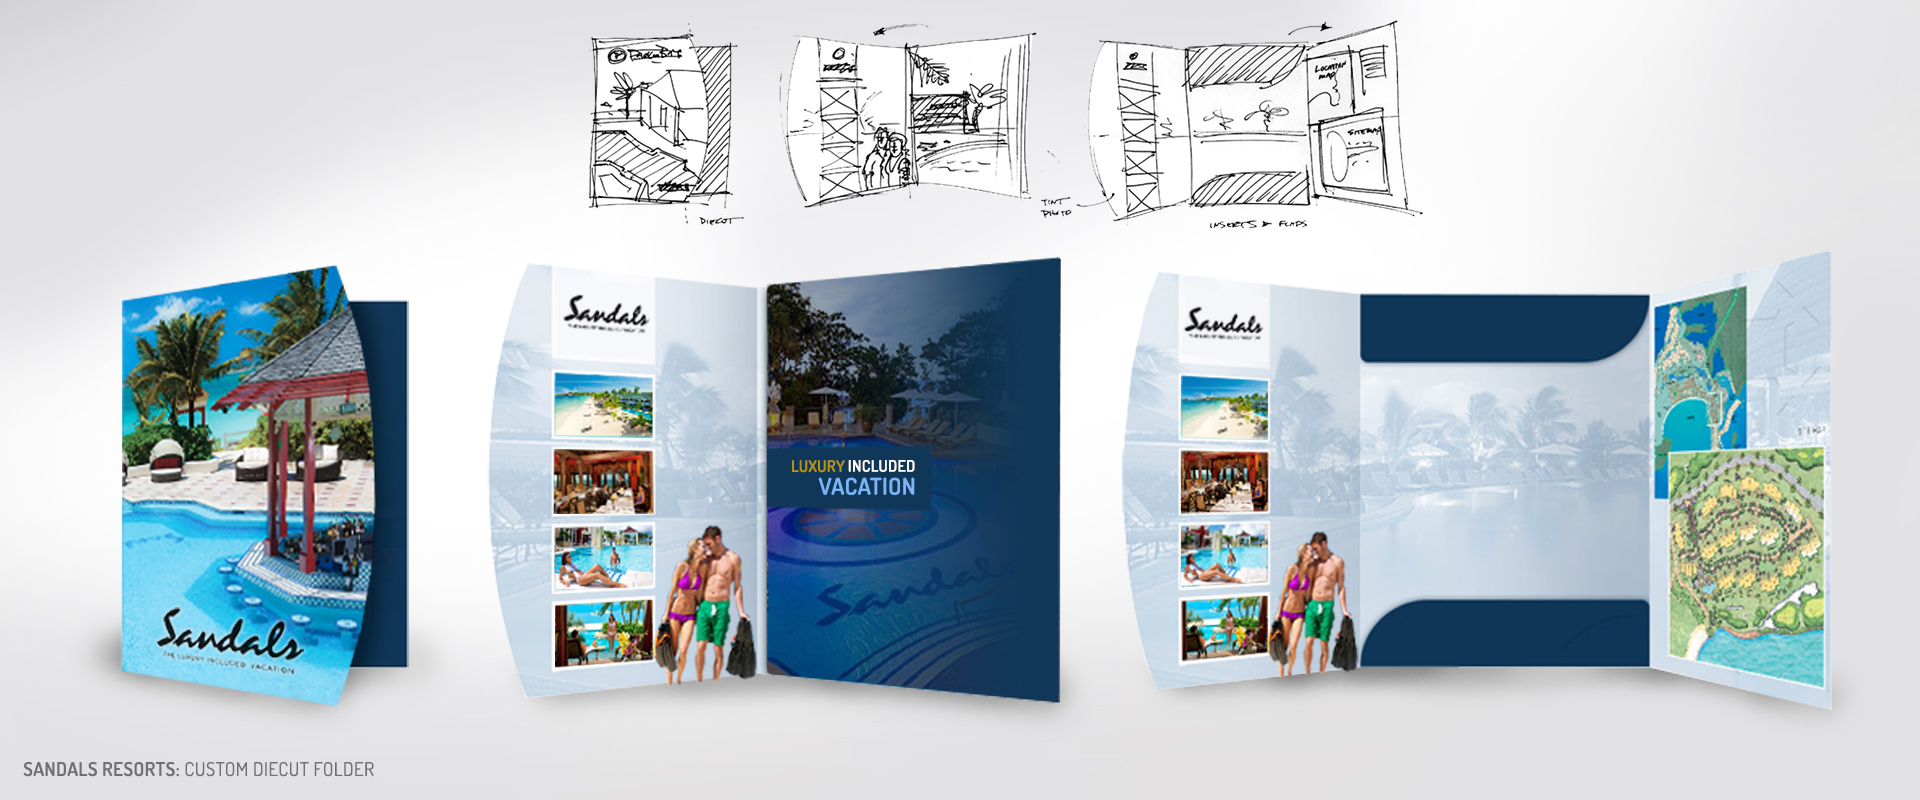 Sandals Resorts: Custom Diecut Folder